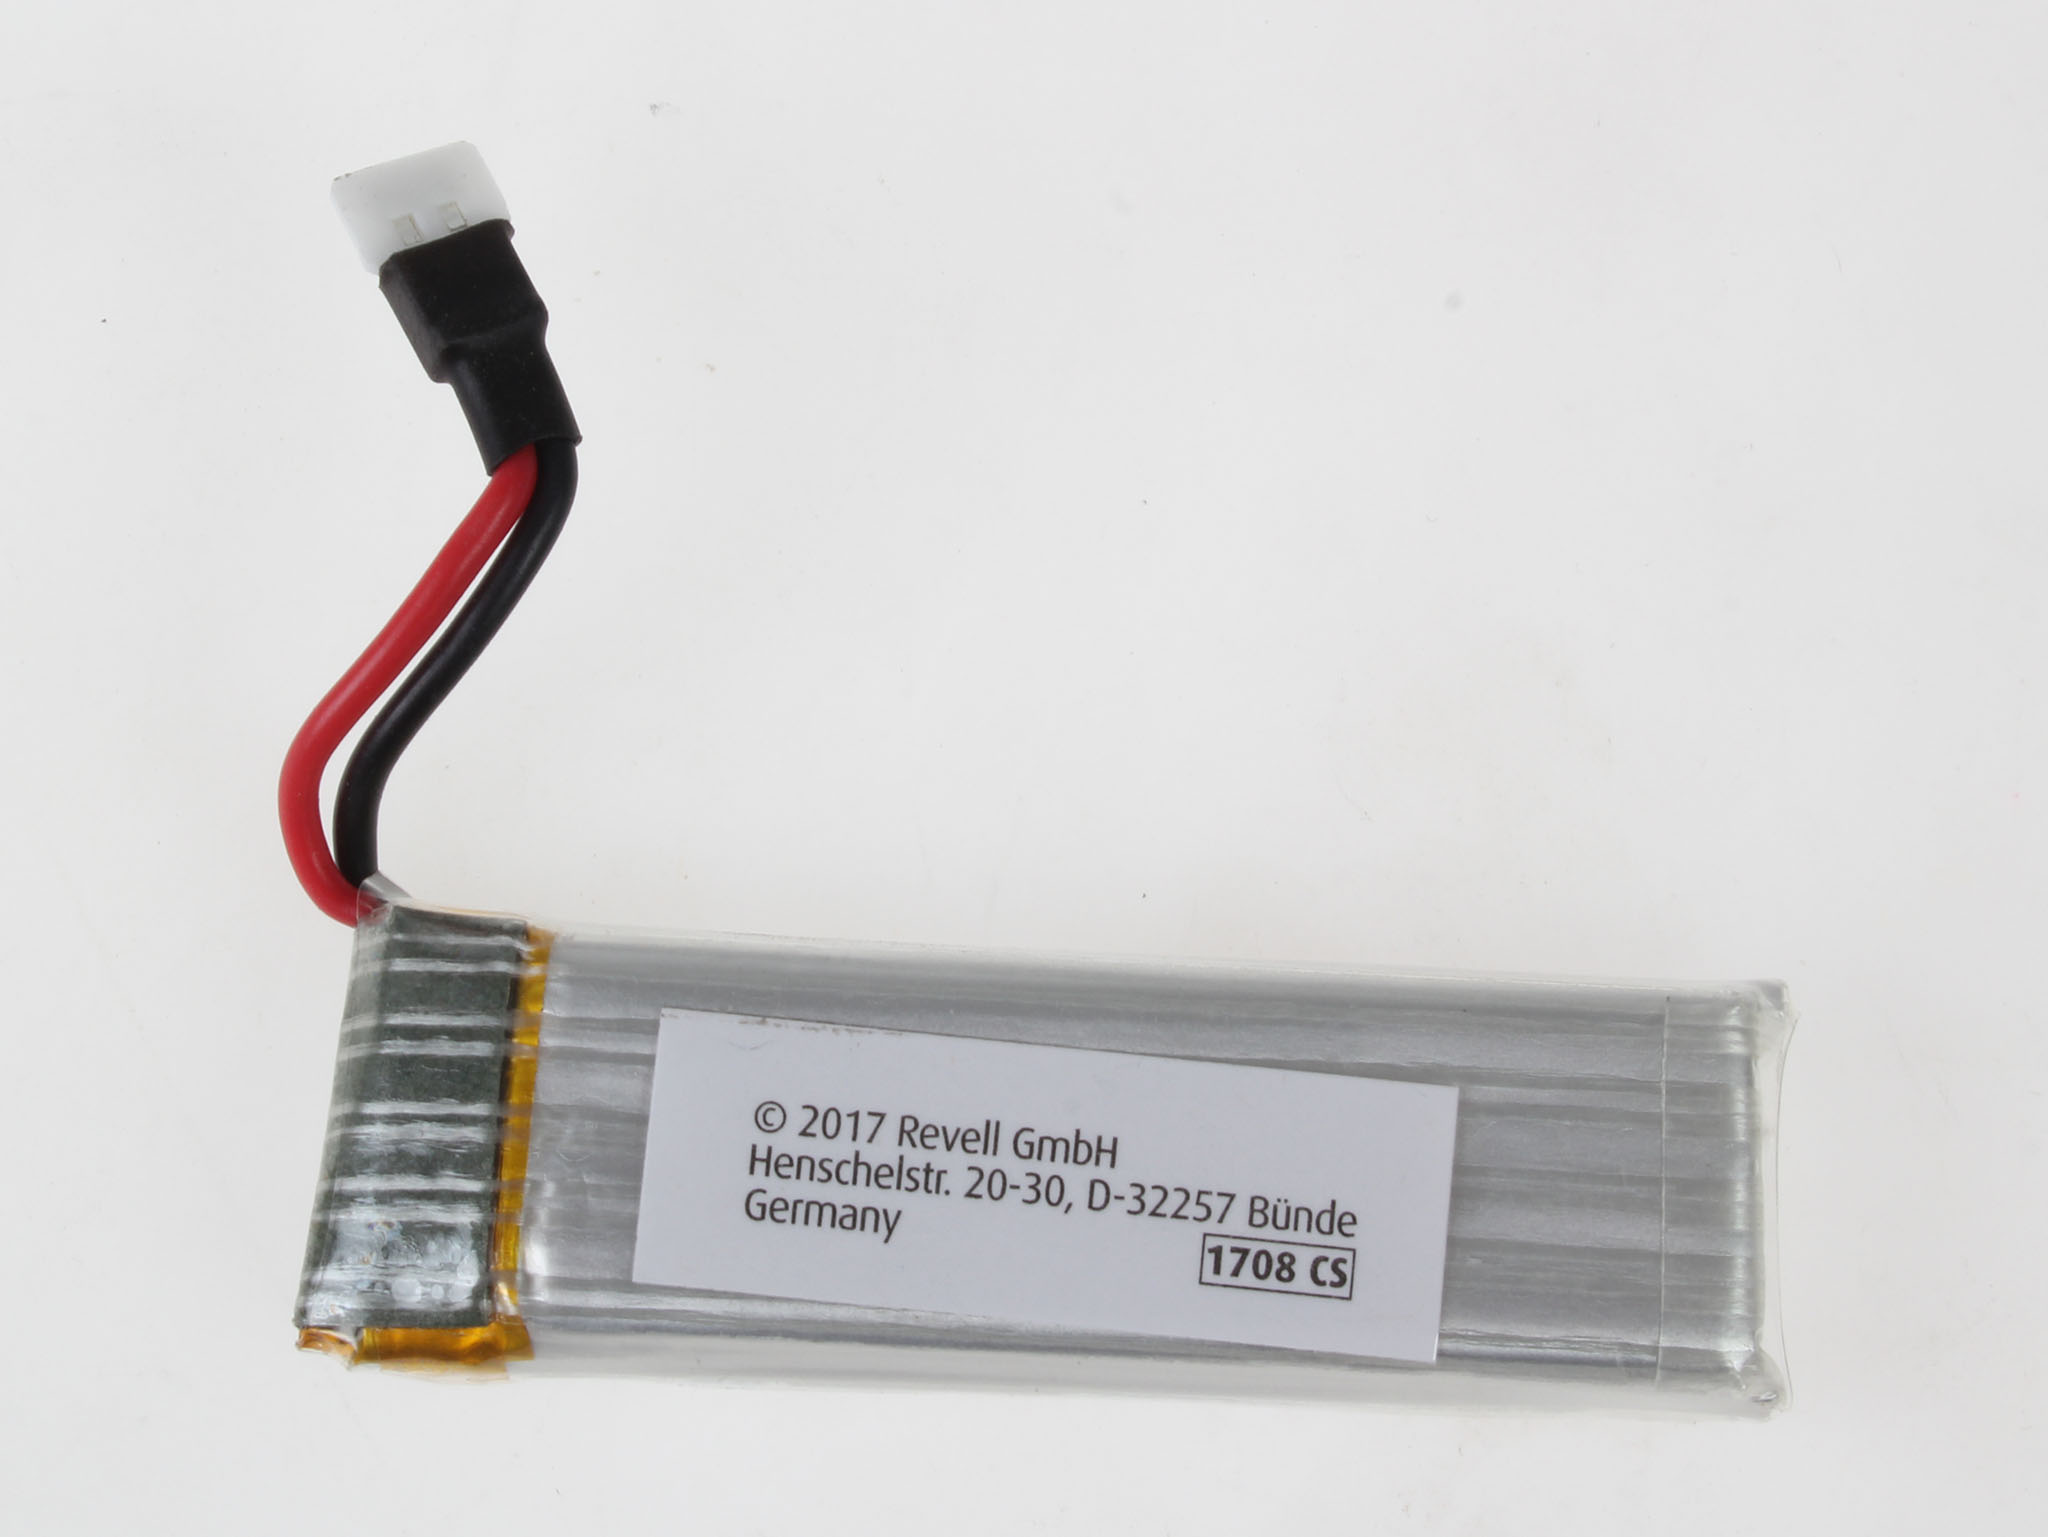 LiPo Battery 3,7 V/500mAh(01013)